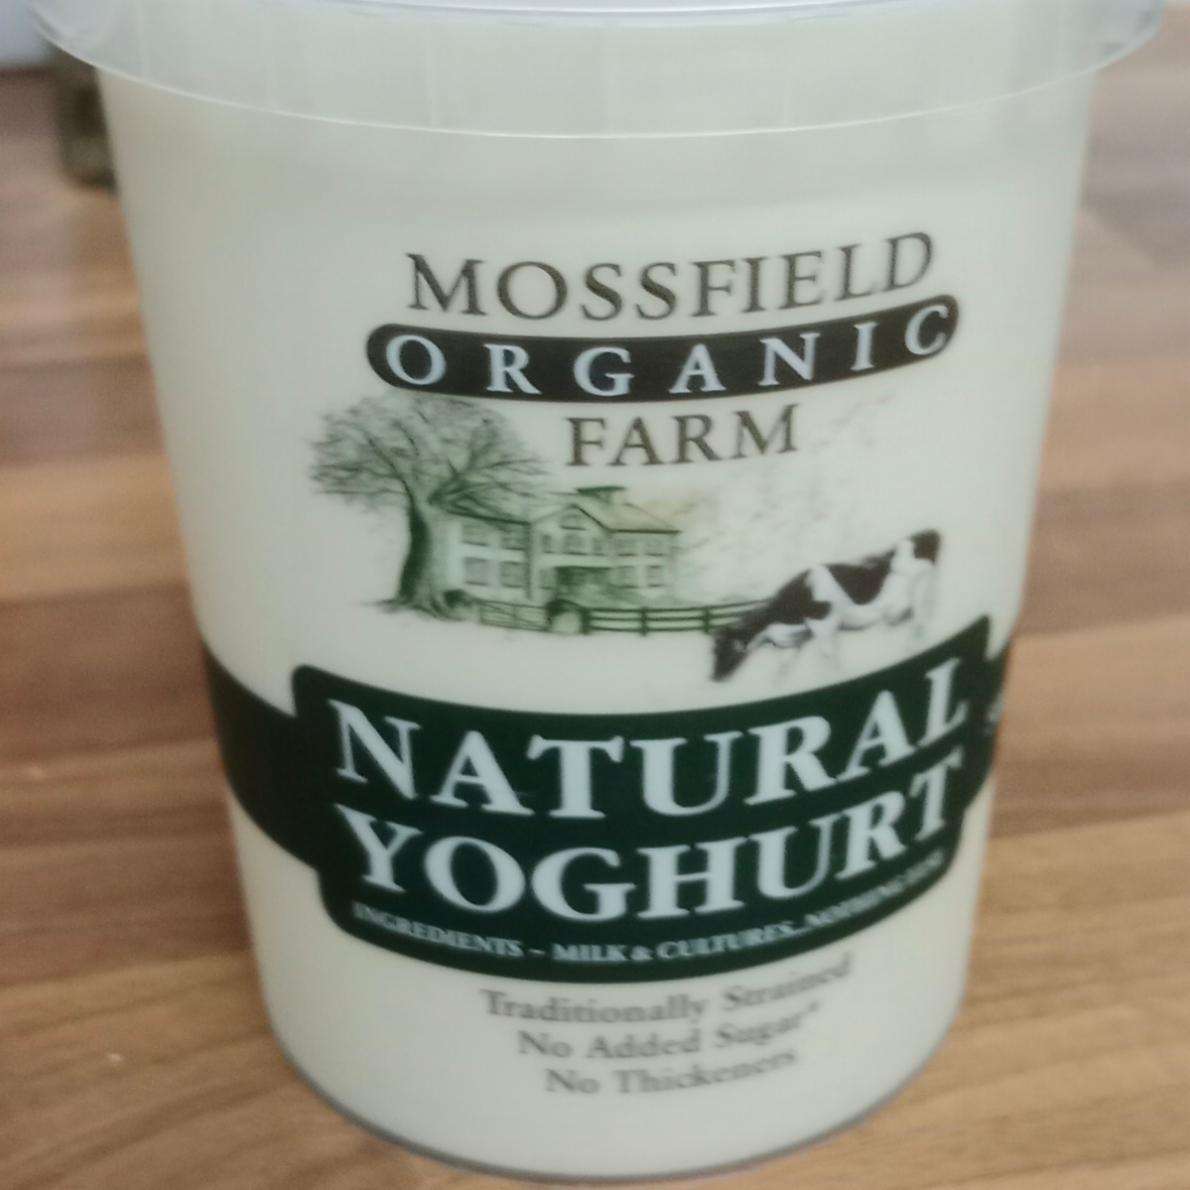 Fotografie - Natural Yoghurt Mossfield Organic Farm